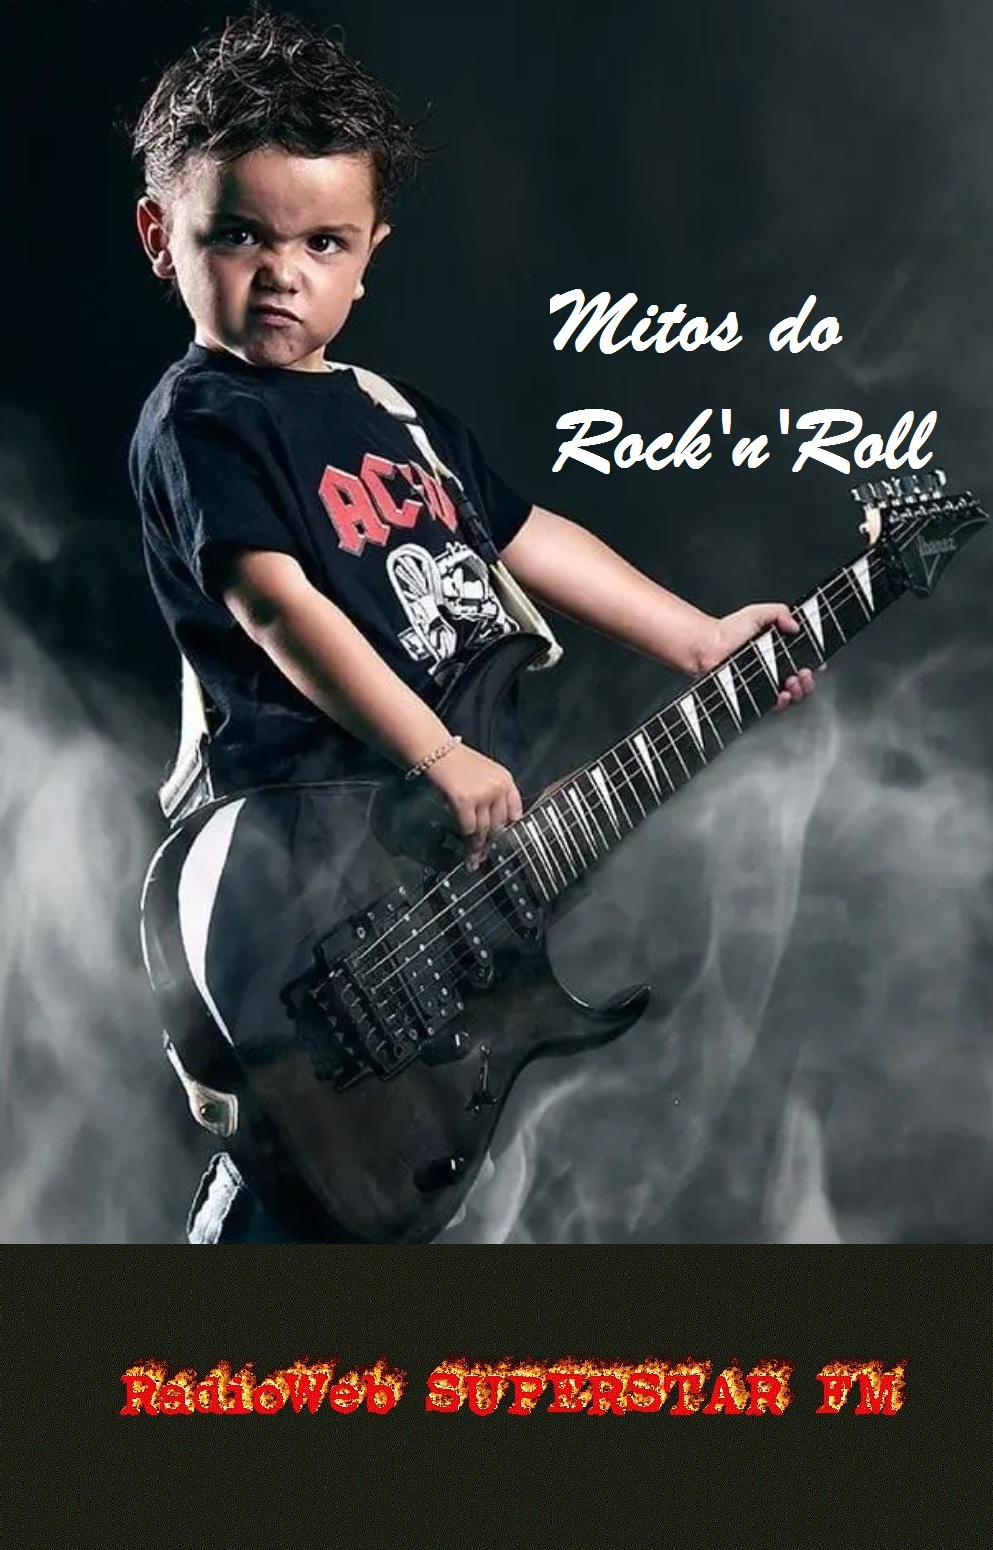 MITOS DO ROCK'N'ROLL